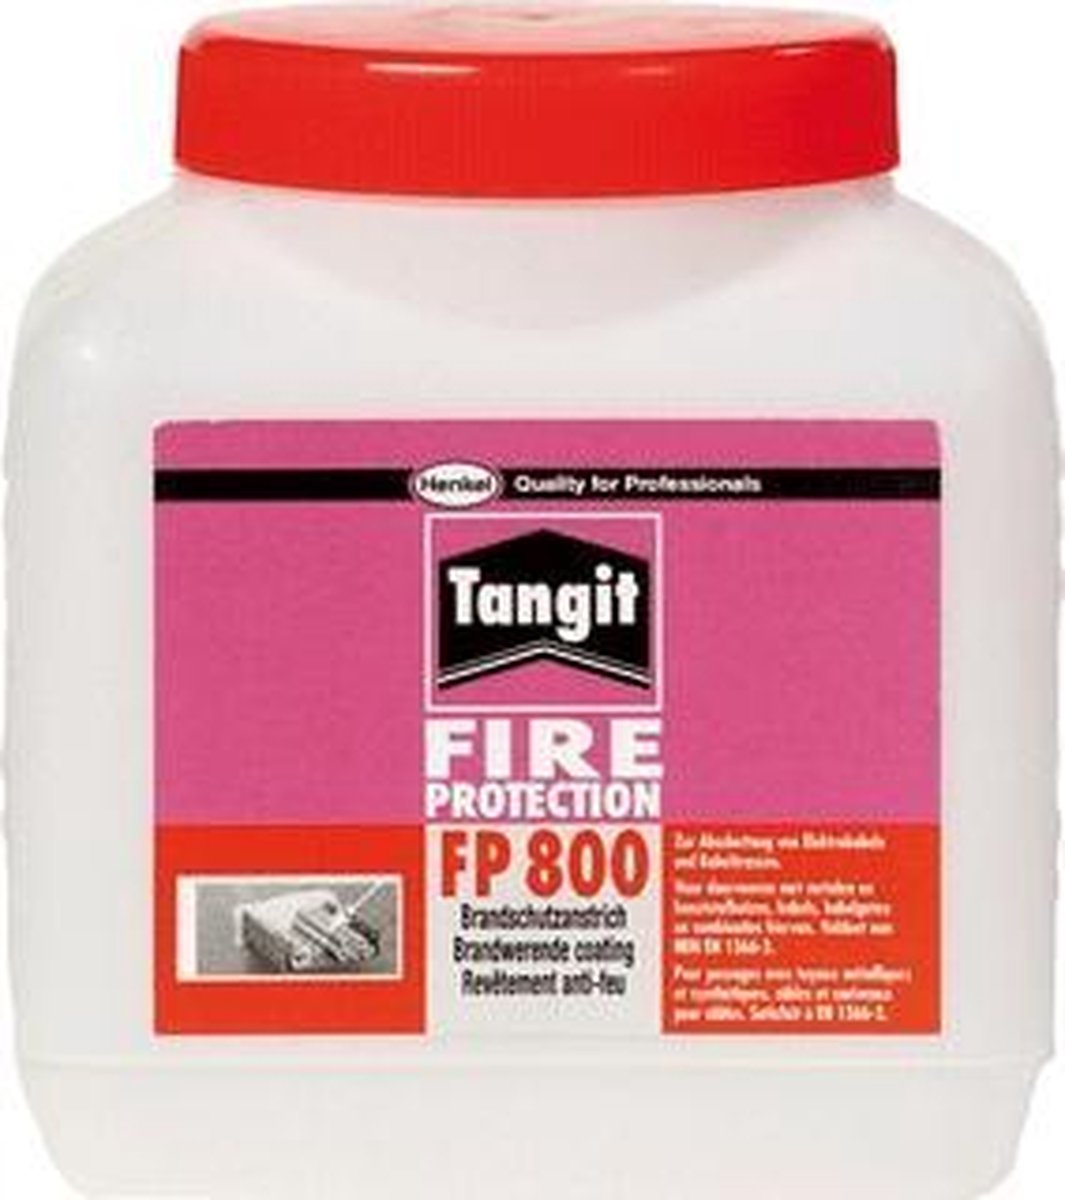 Tangit FP 800 brandwerende coating 1 KG, WIT